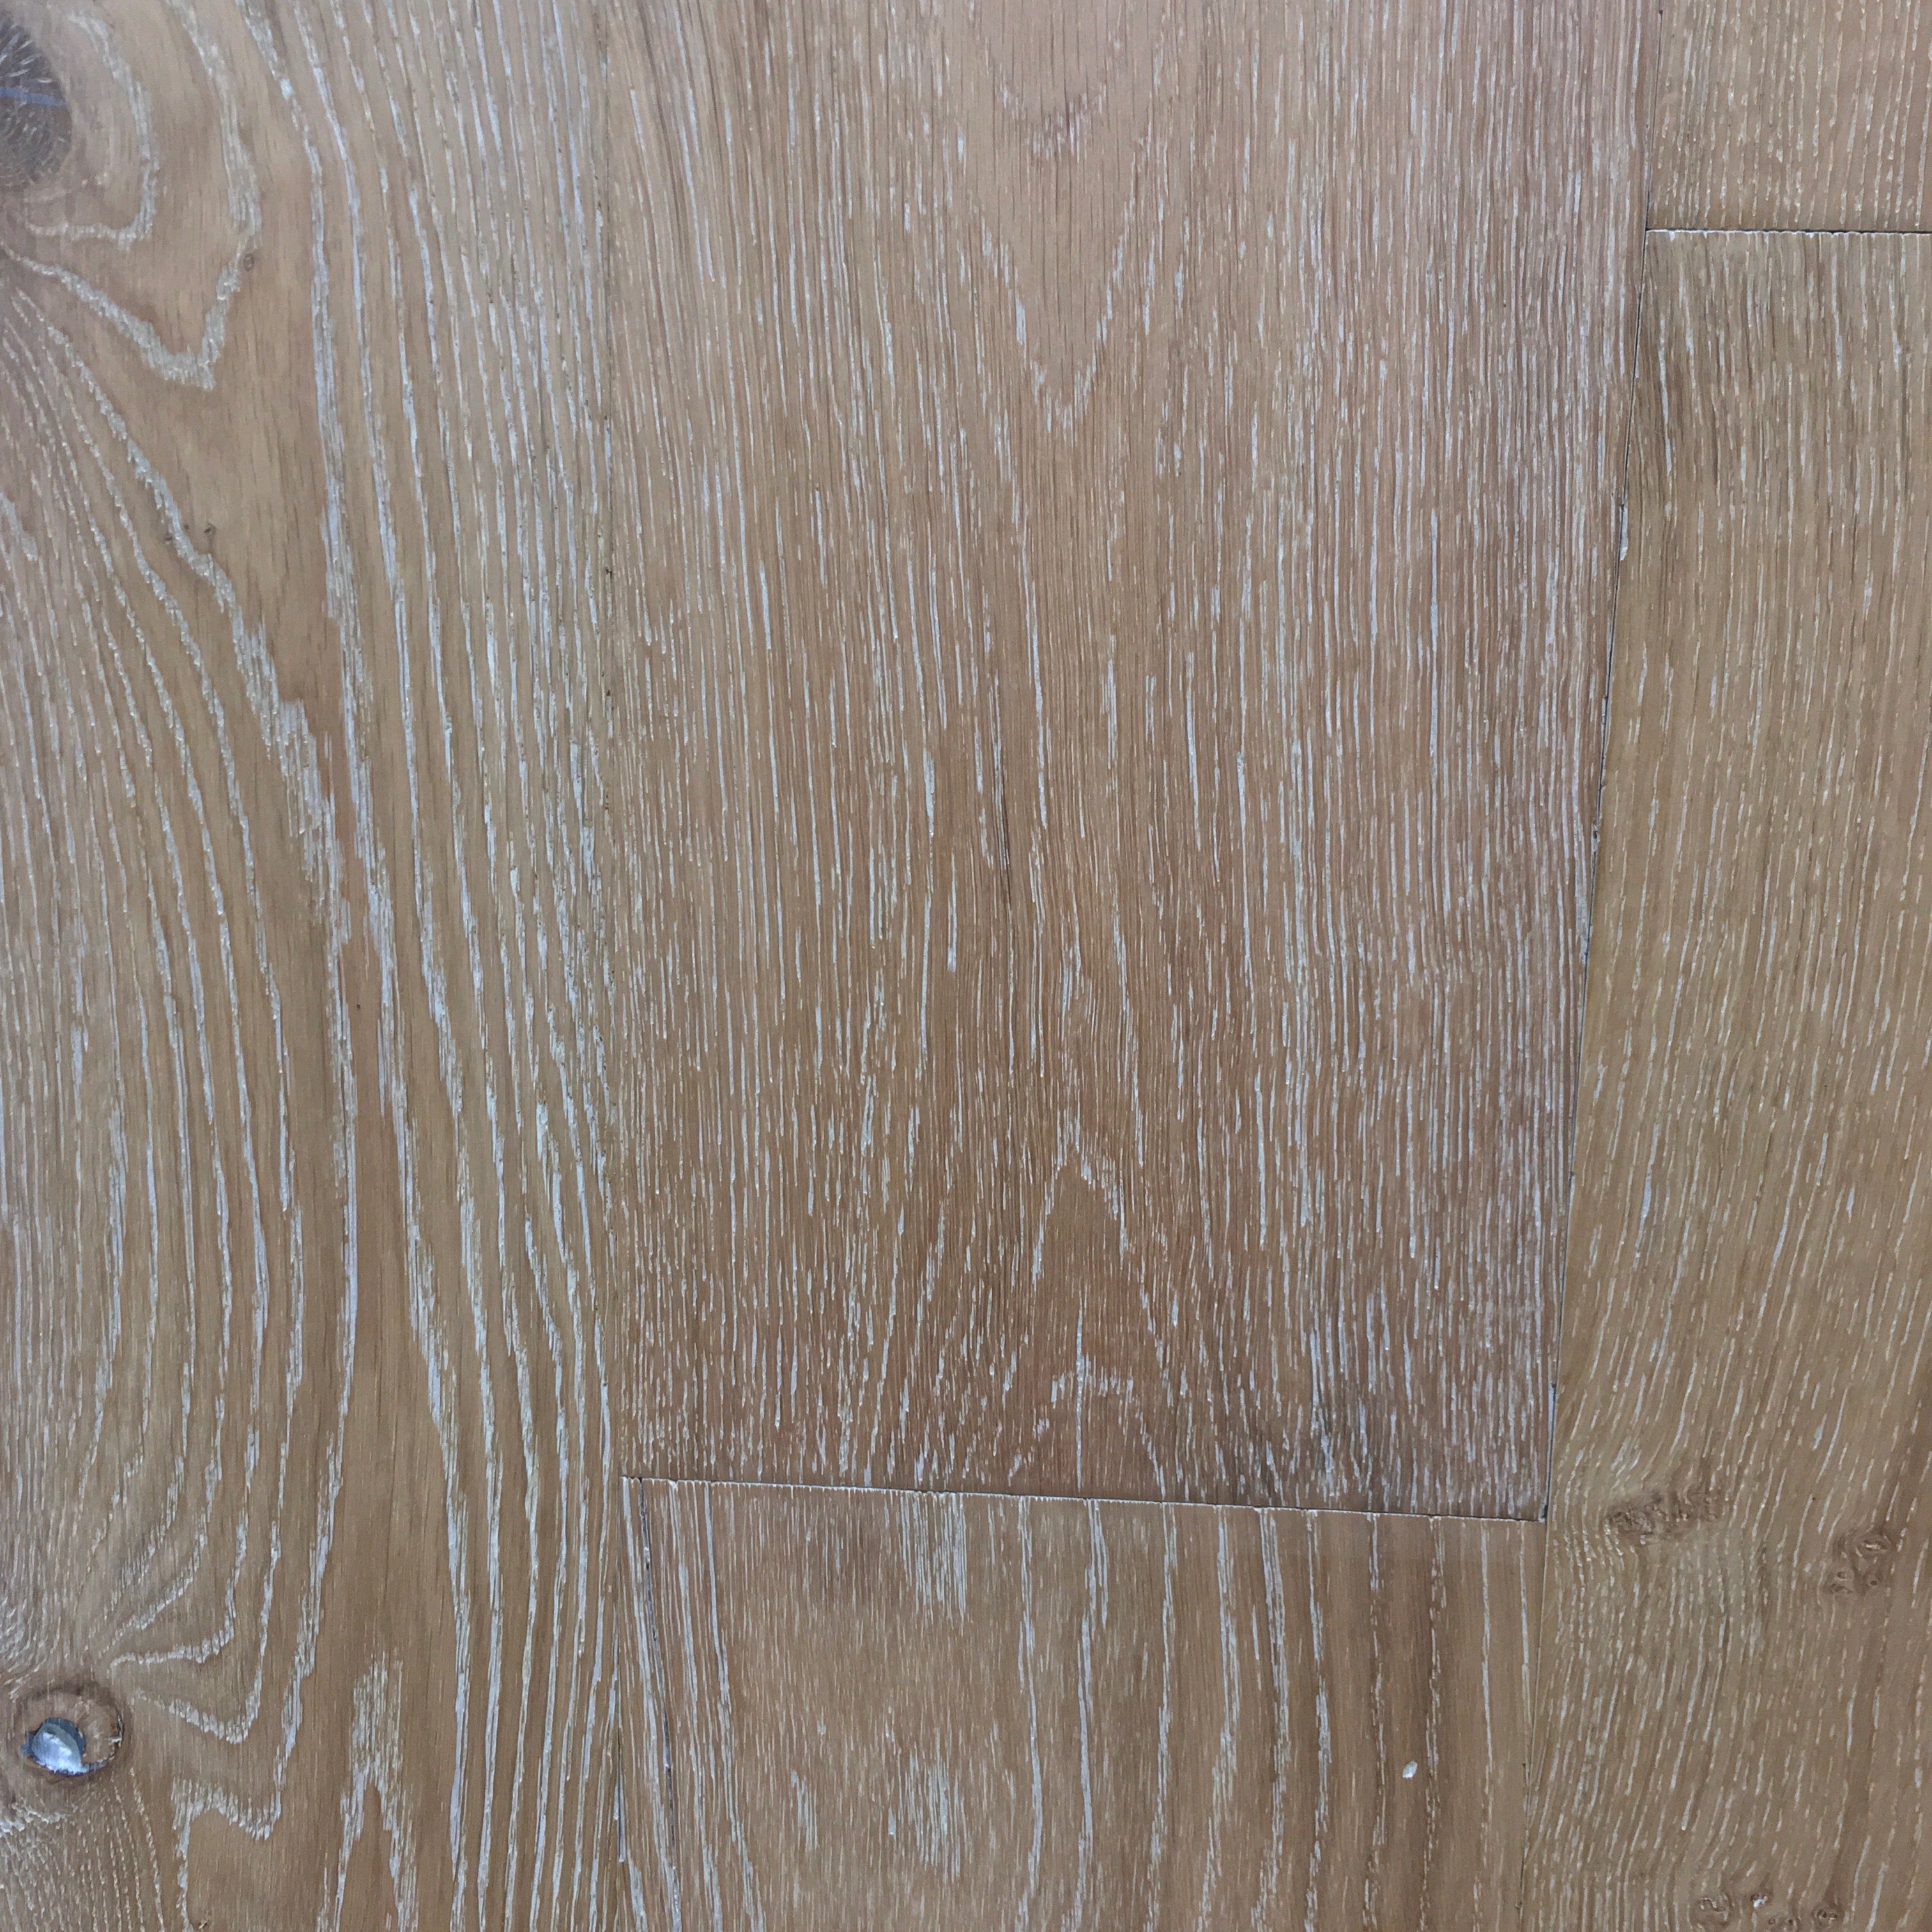 Western Ash 5 8 Engineered Hardwood Flooring By Shaw Floors